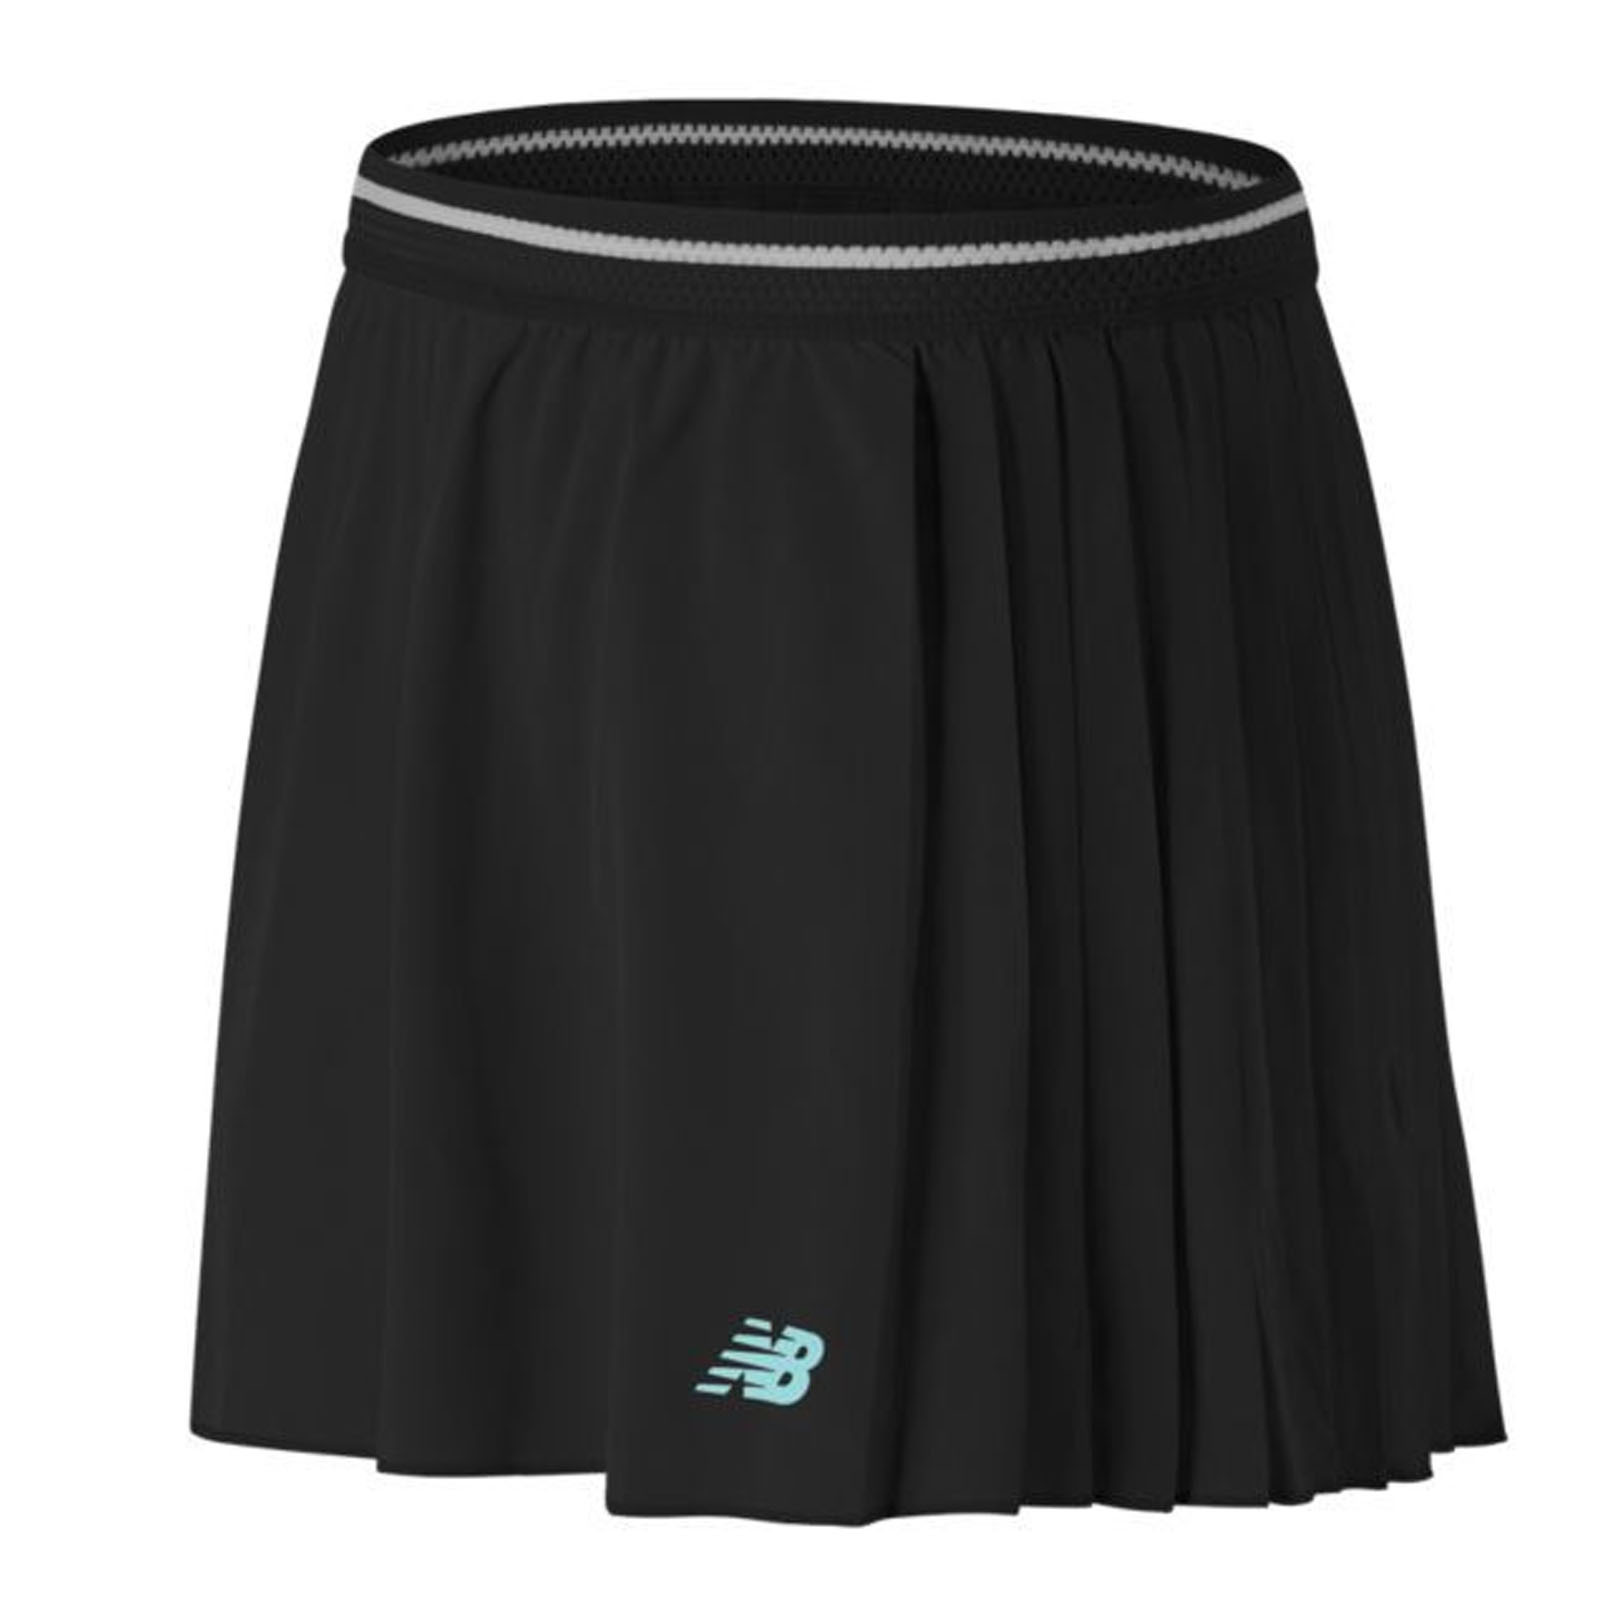 NEW,BALANCE Tournament Skirt Skort Tennis Sports Bottom - Black